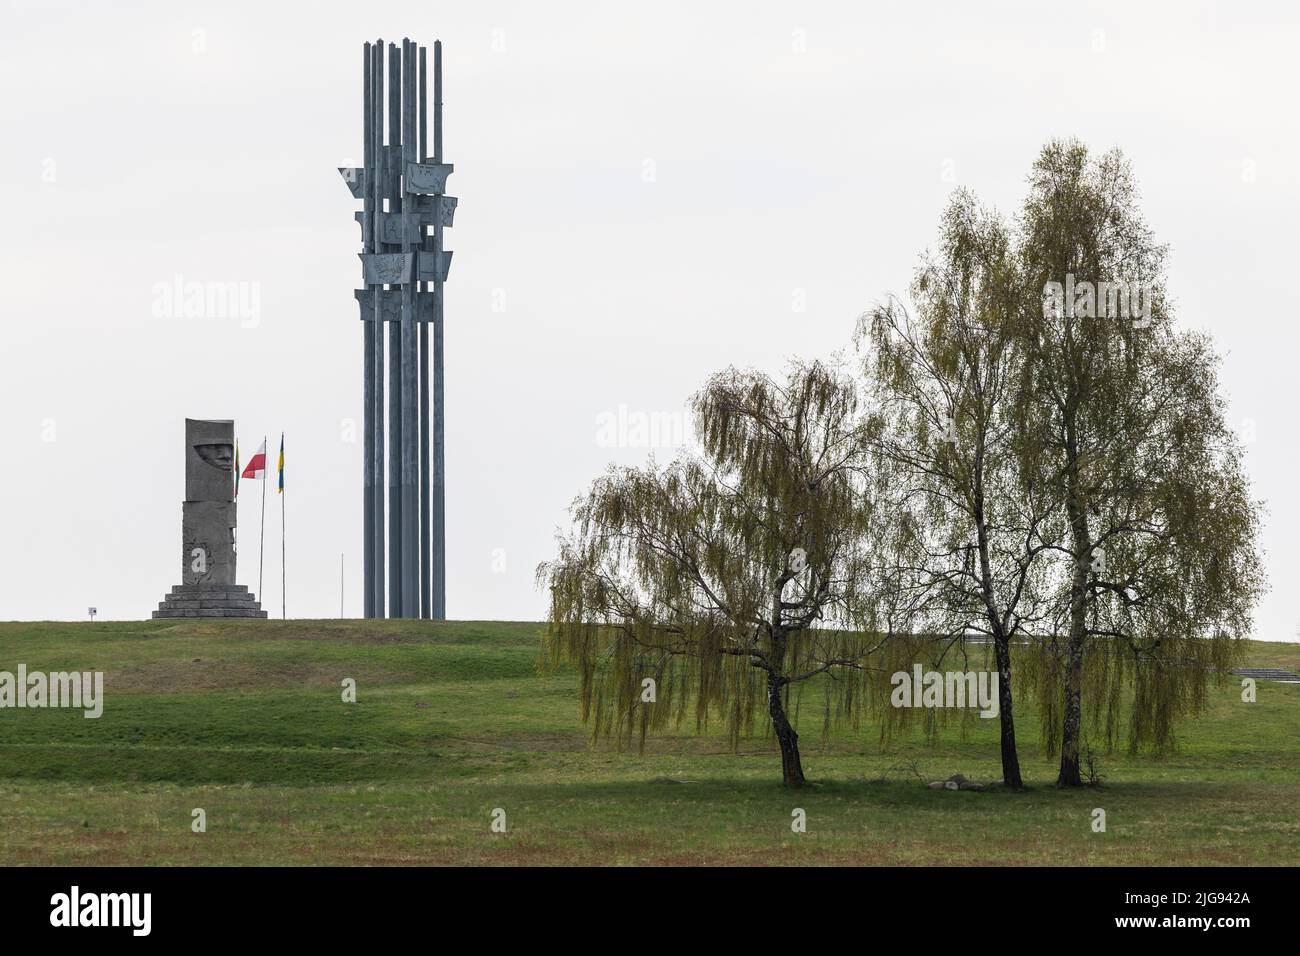 Europe, Poland, Warmian-Masurian Voivodeship, Grunwald - monument to the Battle of Grunwald 1410 Stock Photo